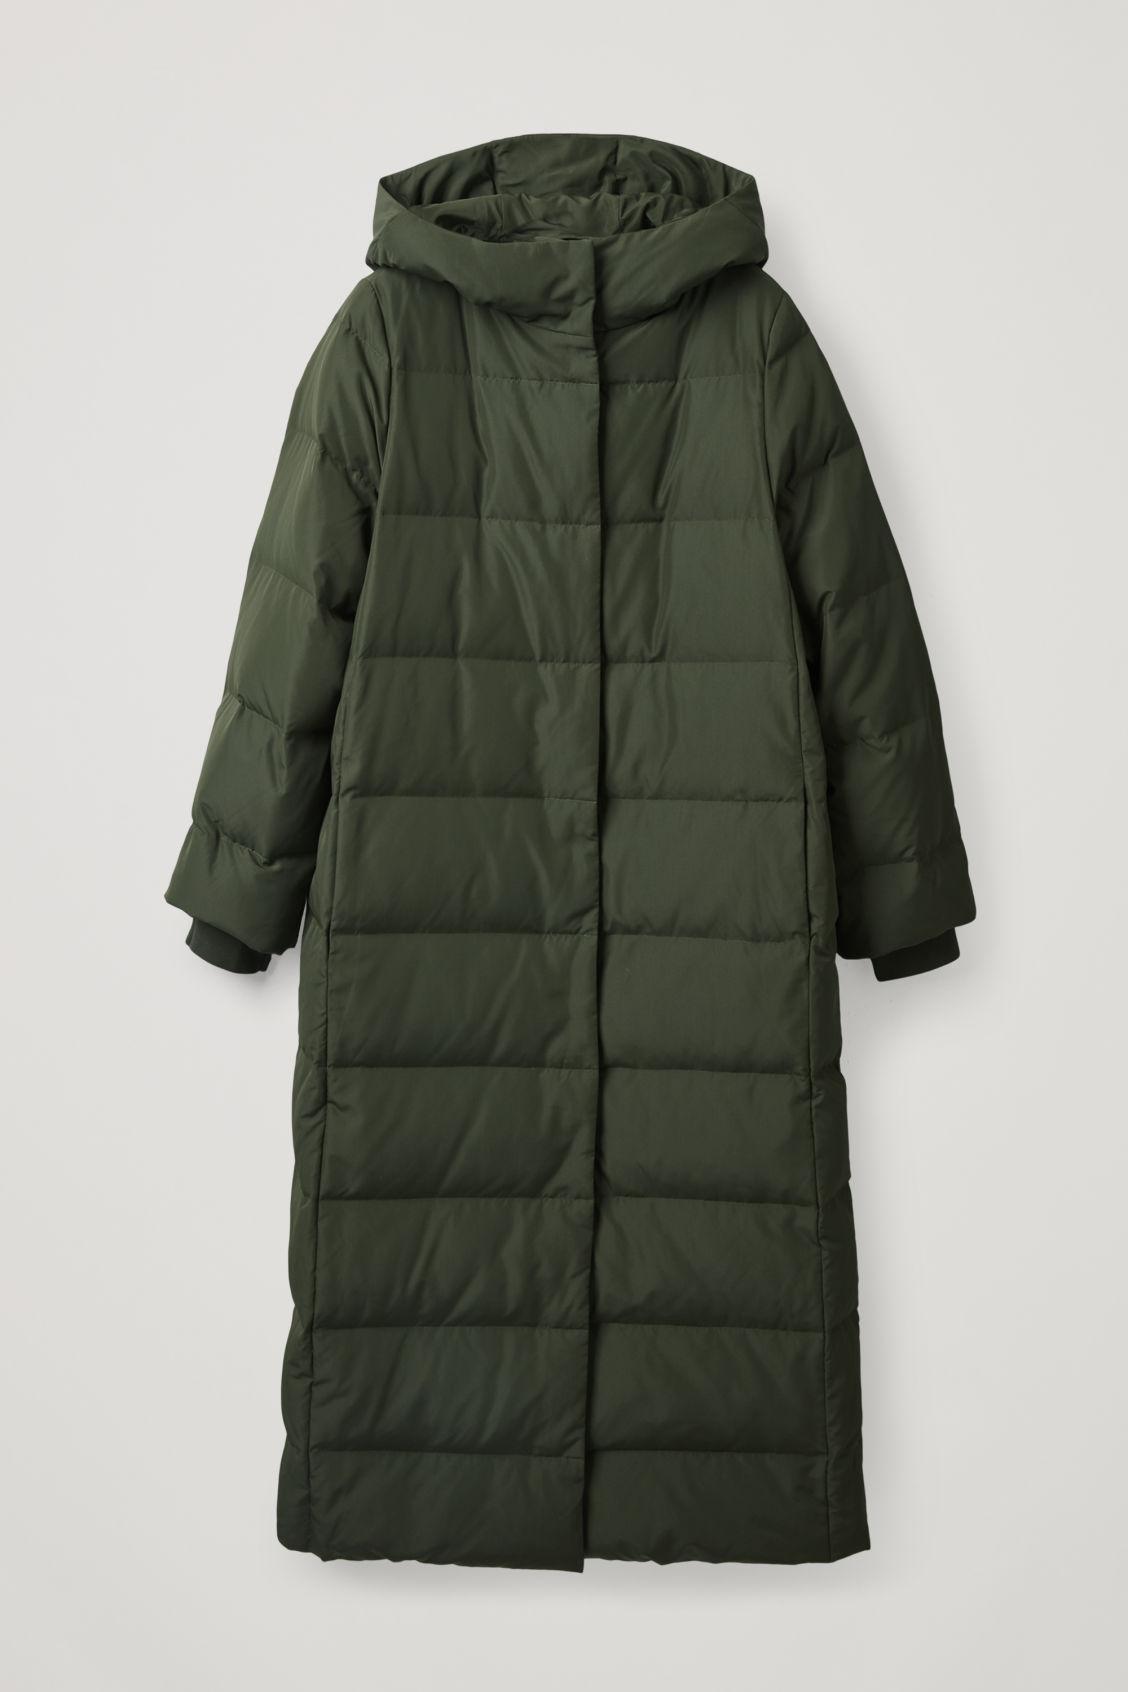 COS Hooded Long Puffer Coat in Green | Lyst